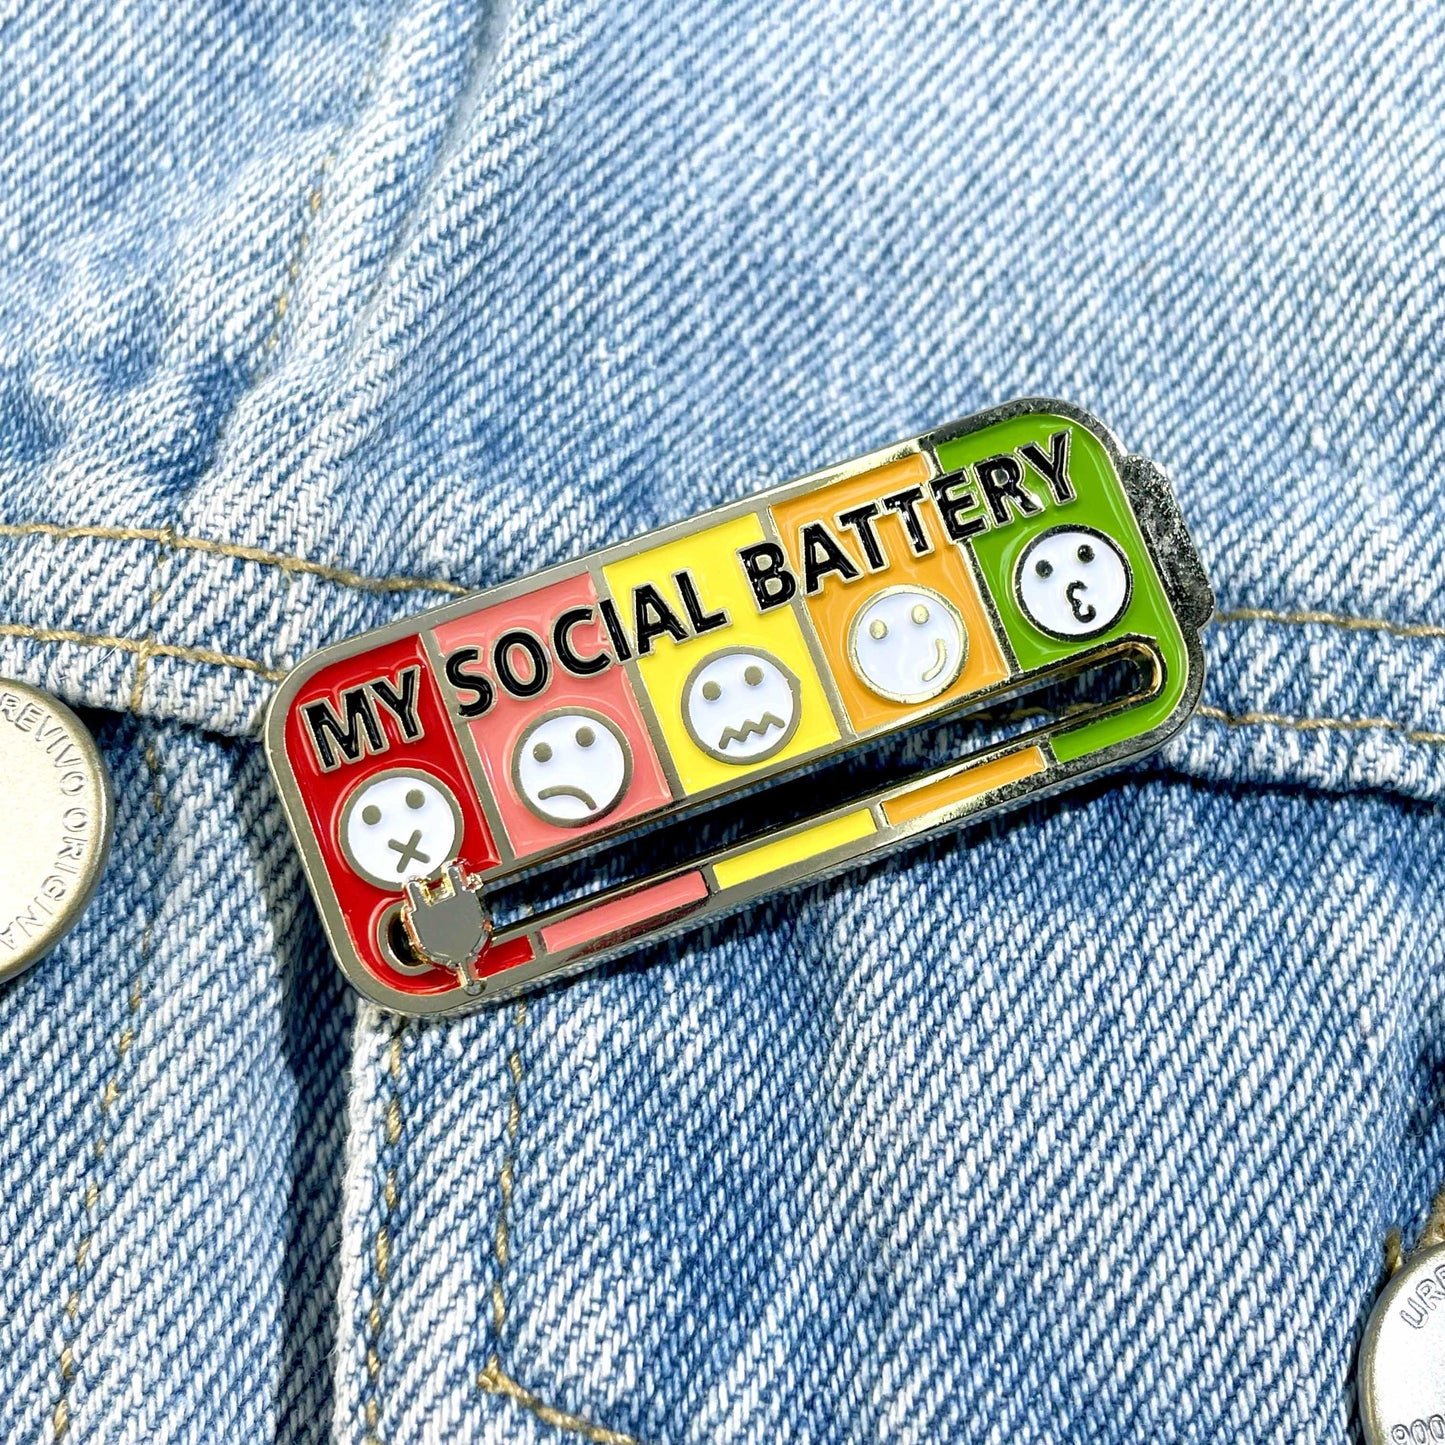 5 States Emoji Social Battery Slipping Lapel Pin